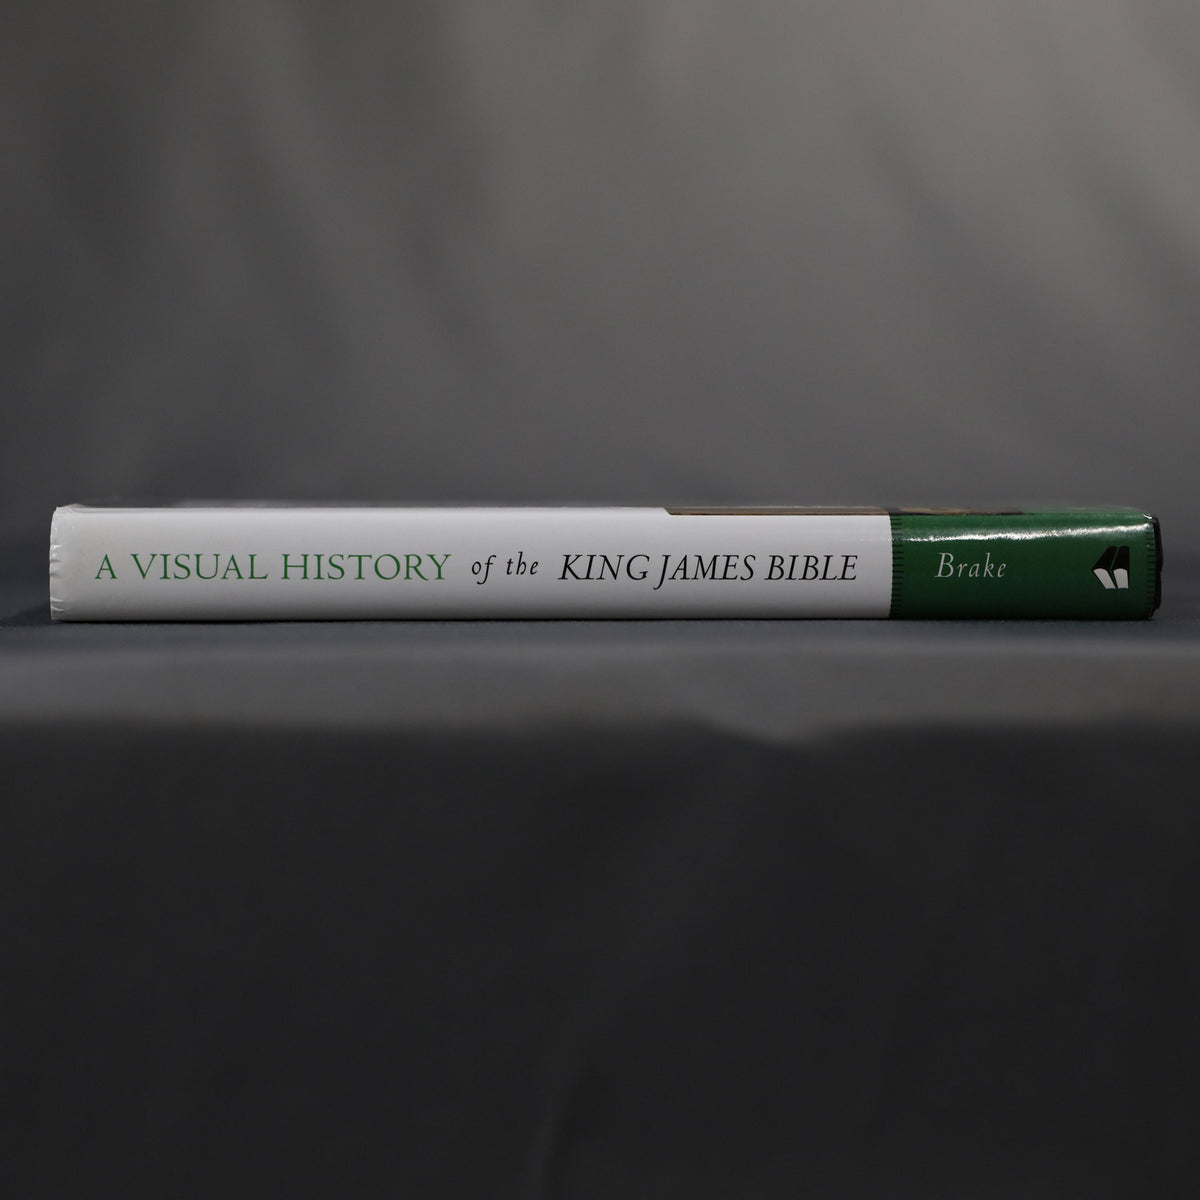 A Visual History of the King James Bible (Brake)